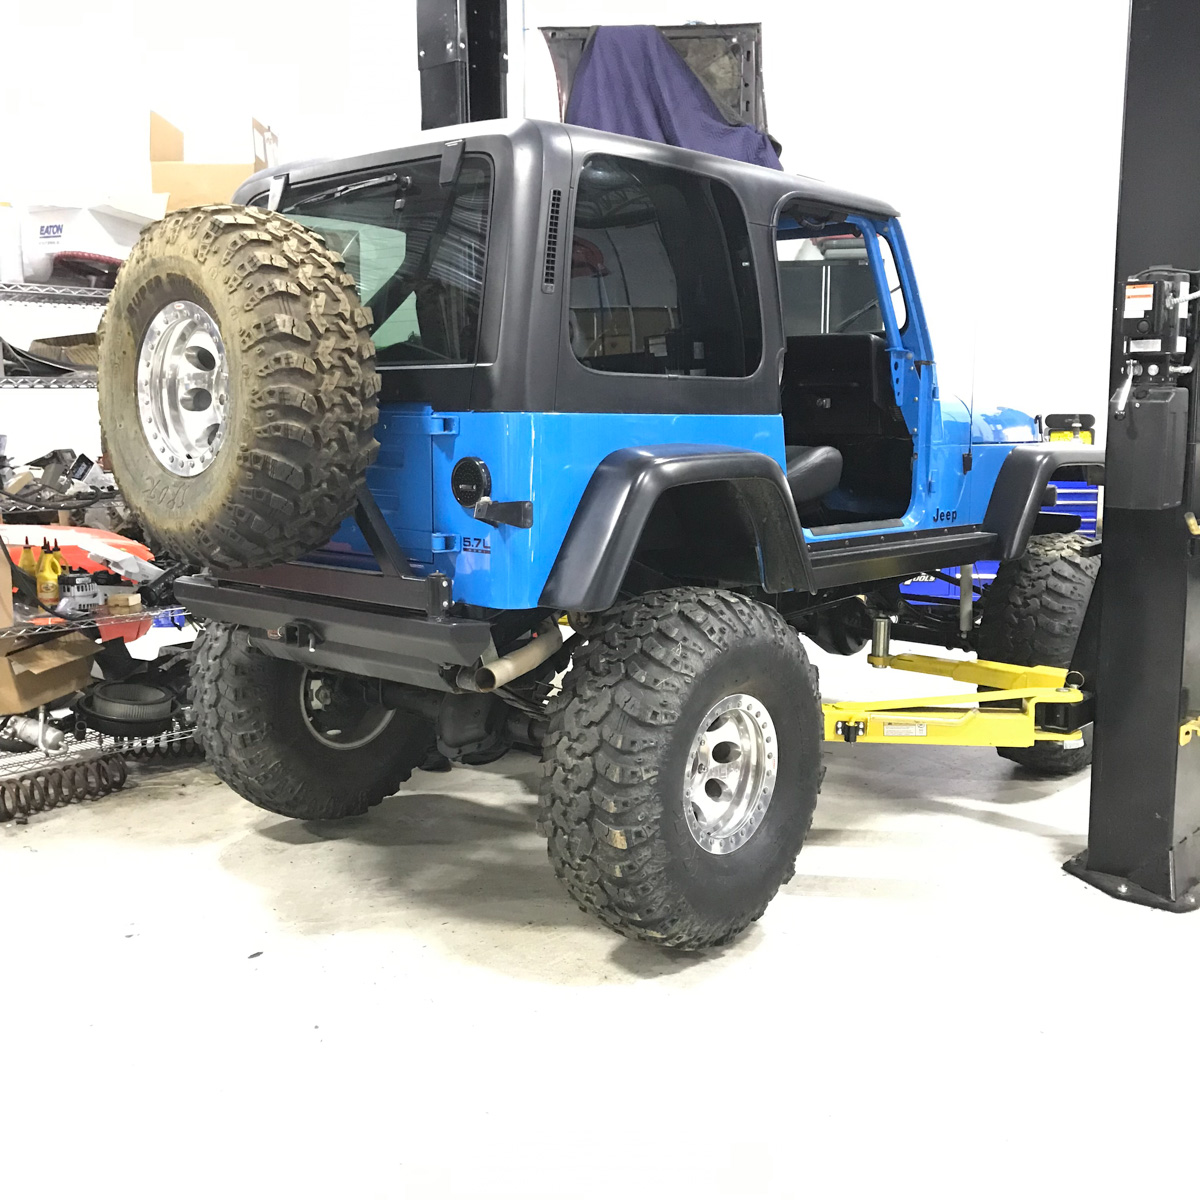 Jeep Wrangler Hemi Five Speed Project - Three Pedals